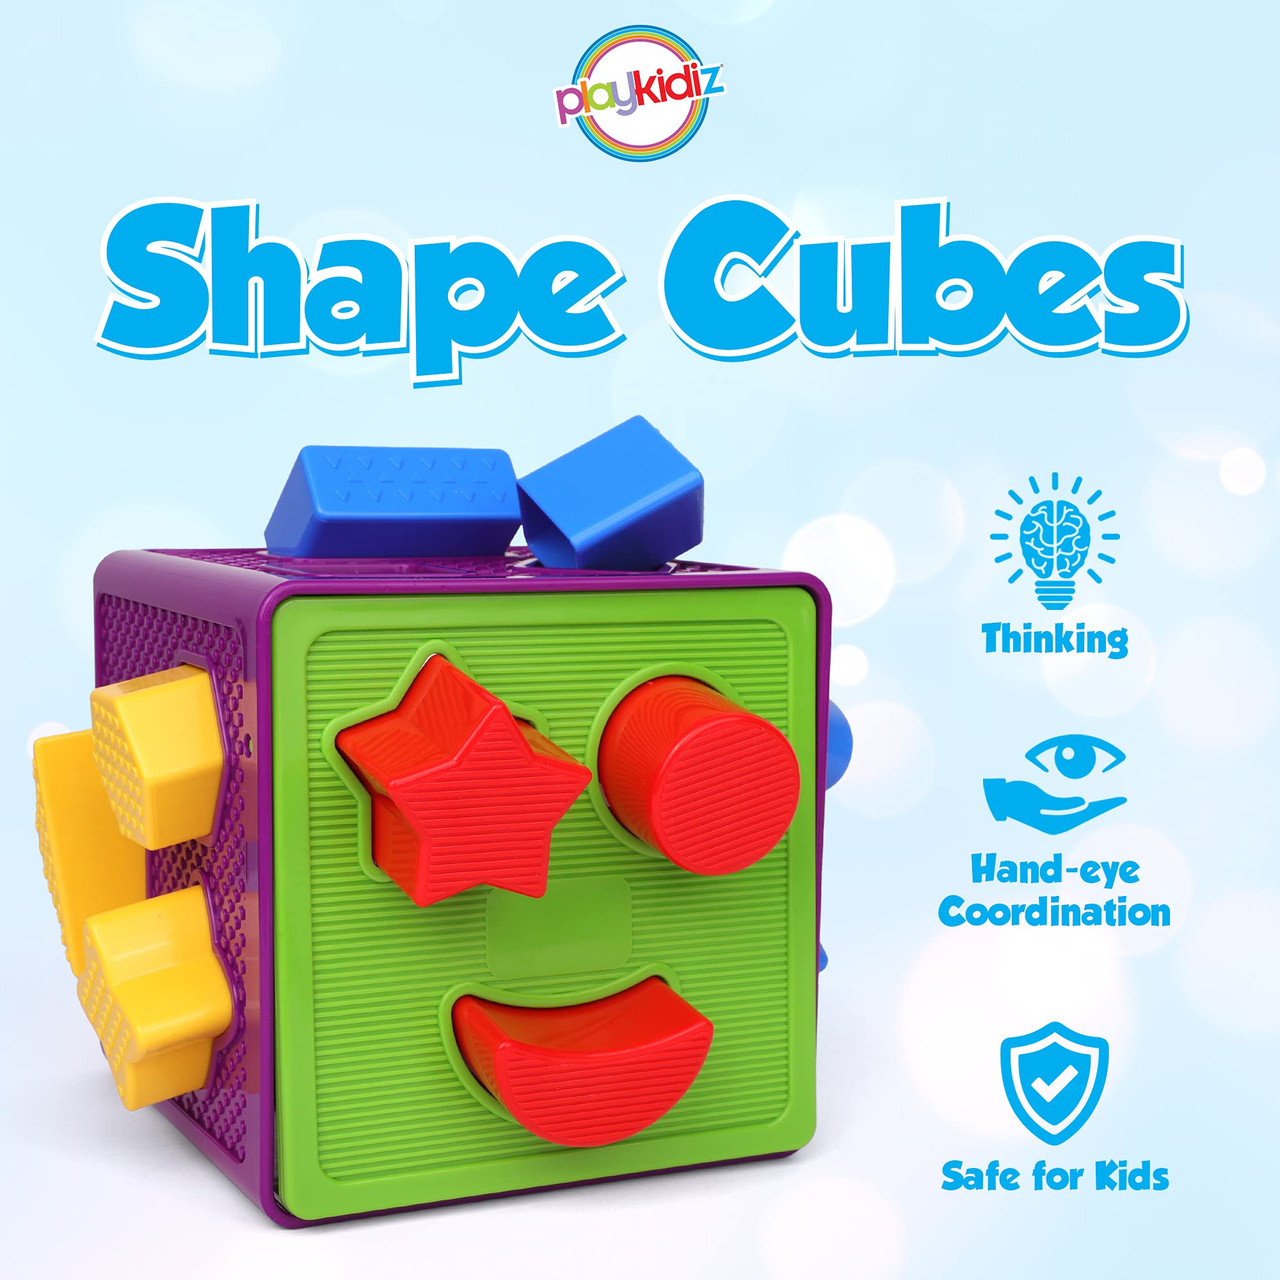 Quadrants DIY Smart Square Block Game - Colorful Different Pack Shape  Locking Cube Blocks - DIY Smart Square Block Game - Colorful Different Pack  Shape Locking Cube Blocks . Buy Cube Blocks